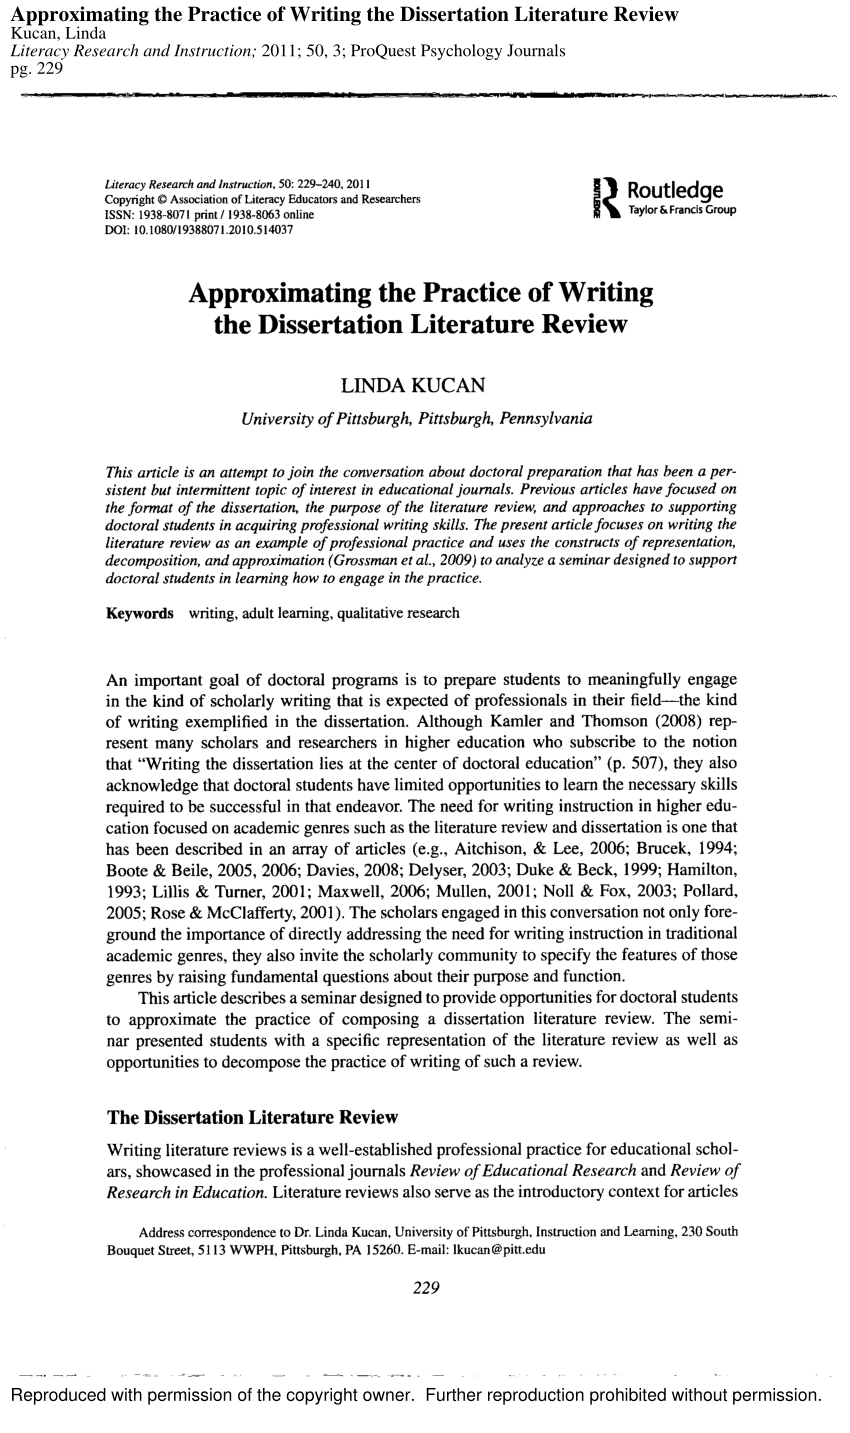 master thesis in literature pdf